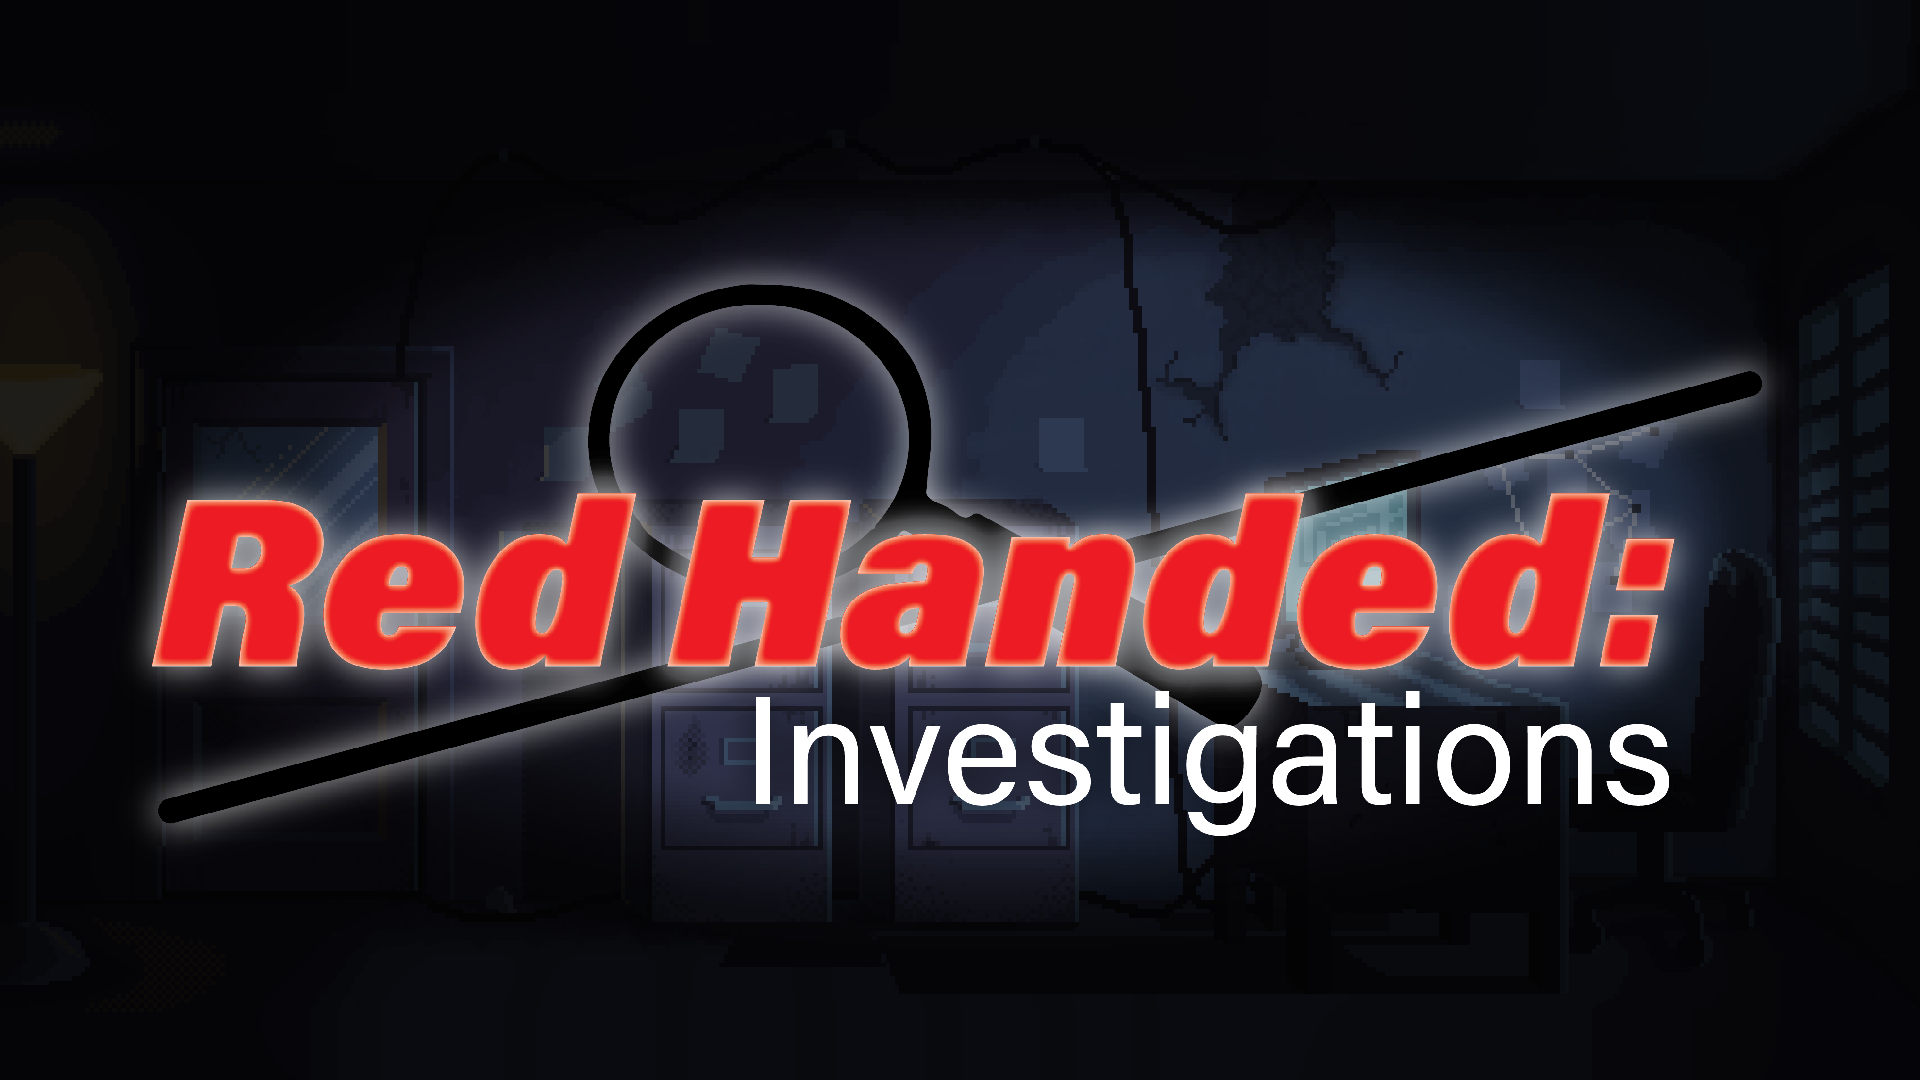 RedHanded: Investigations